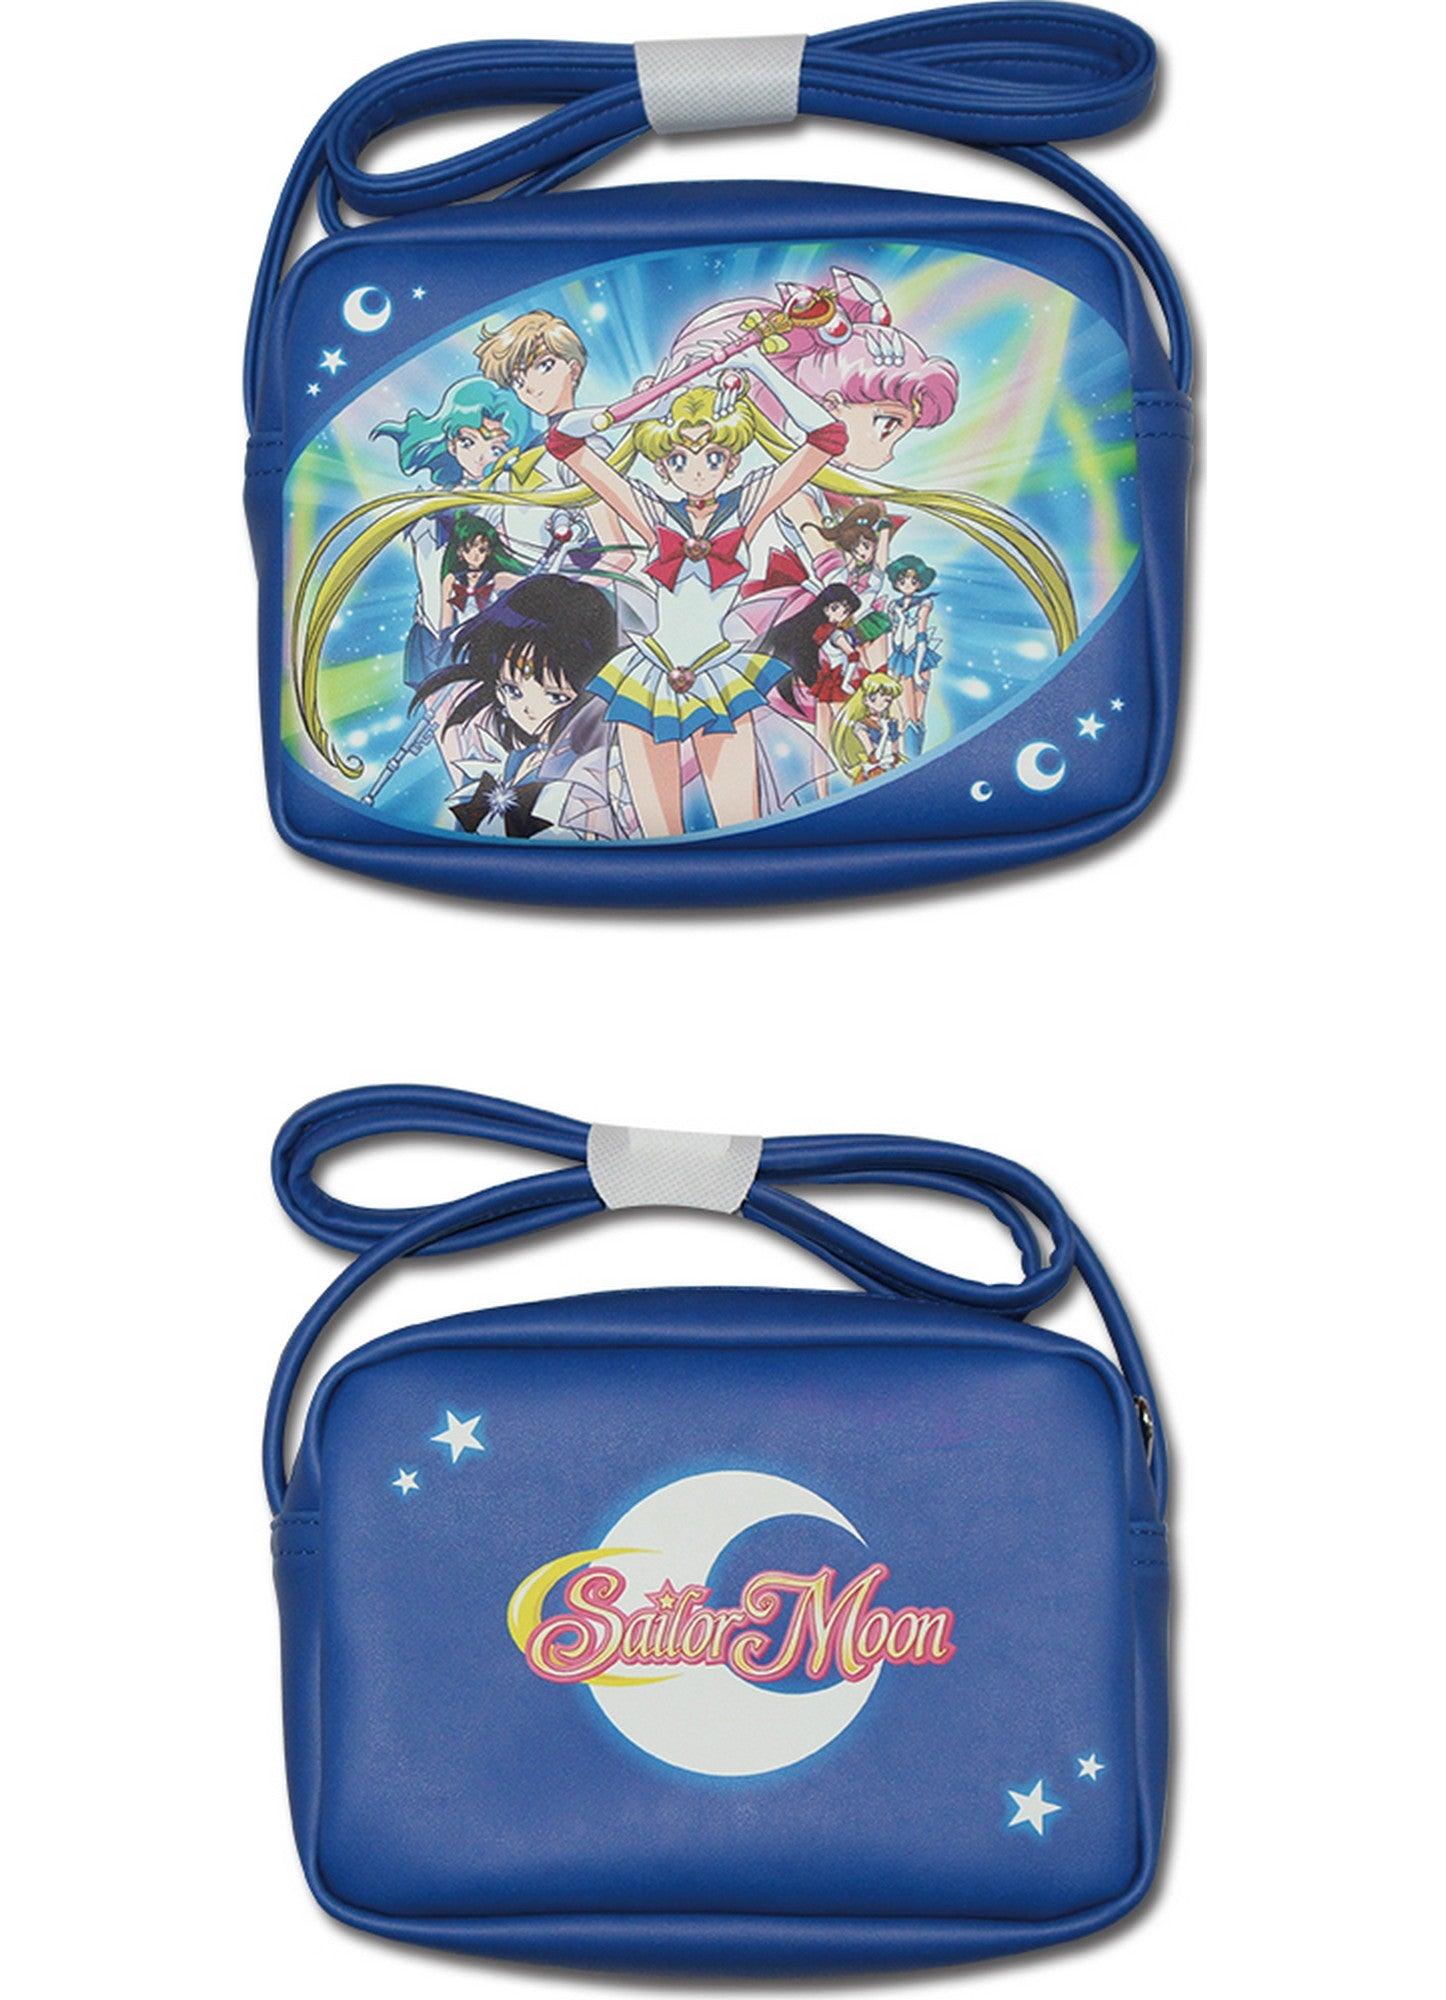 Sailor Moon Sailor Moon Lunch Bag